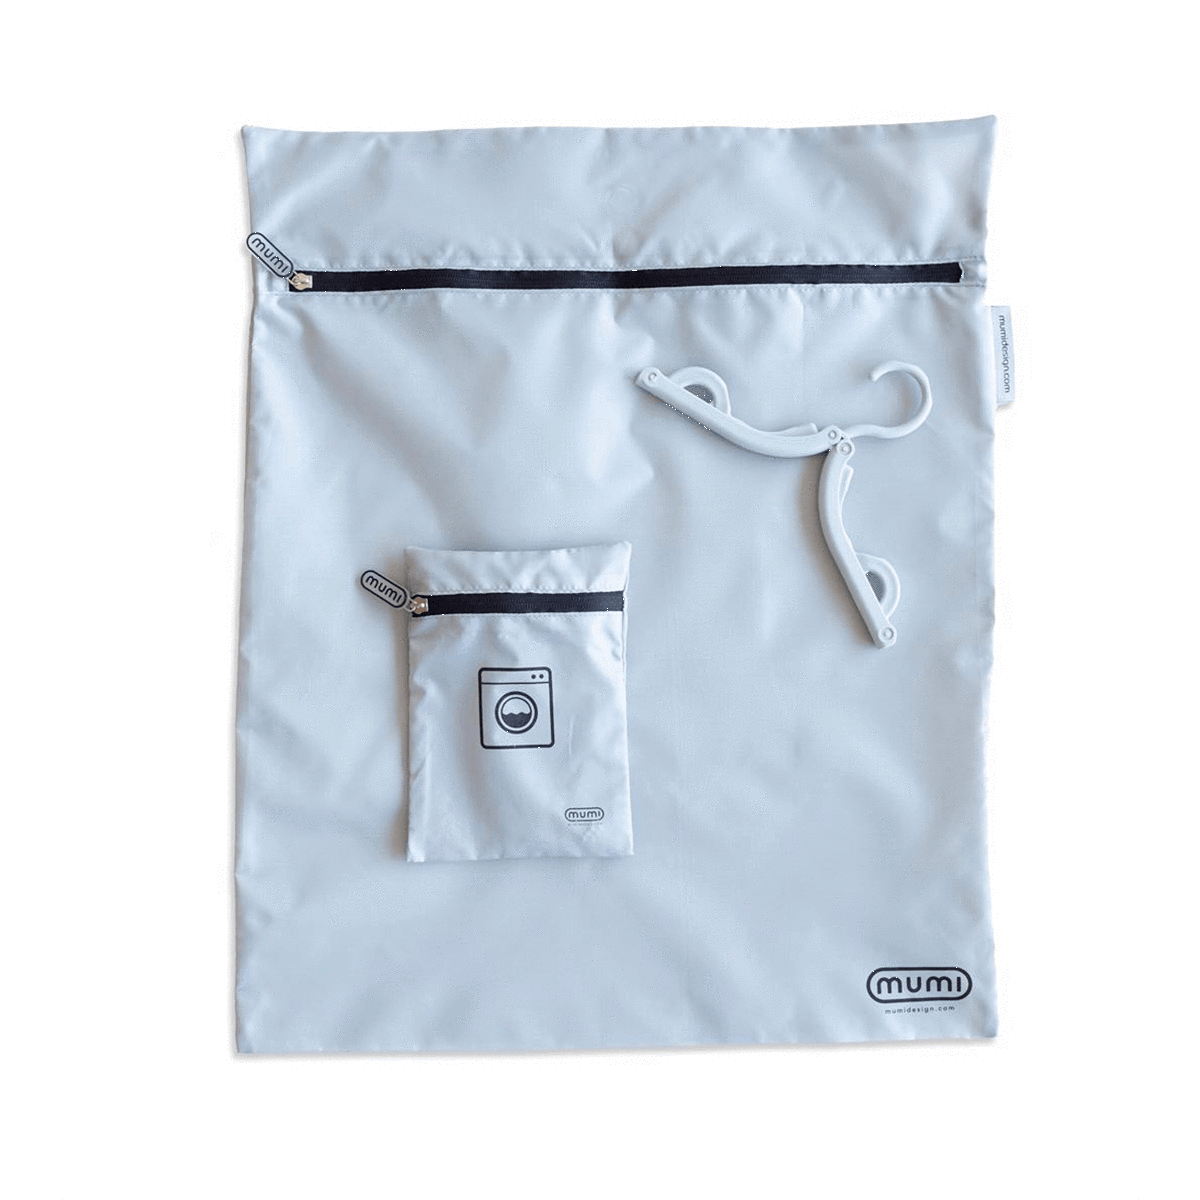 11 X 14 Mesh Laundry Bag Reusable Wash Bag Face Mask Bag Lace Lingerie  Laundry Bag Multifunction Laundry Bag Travel Wash Mesh Bag 